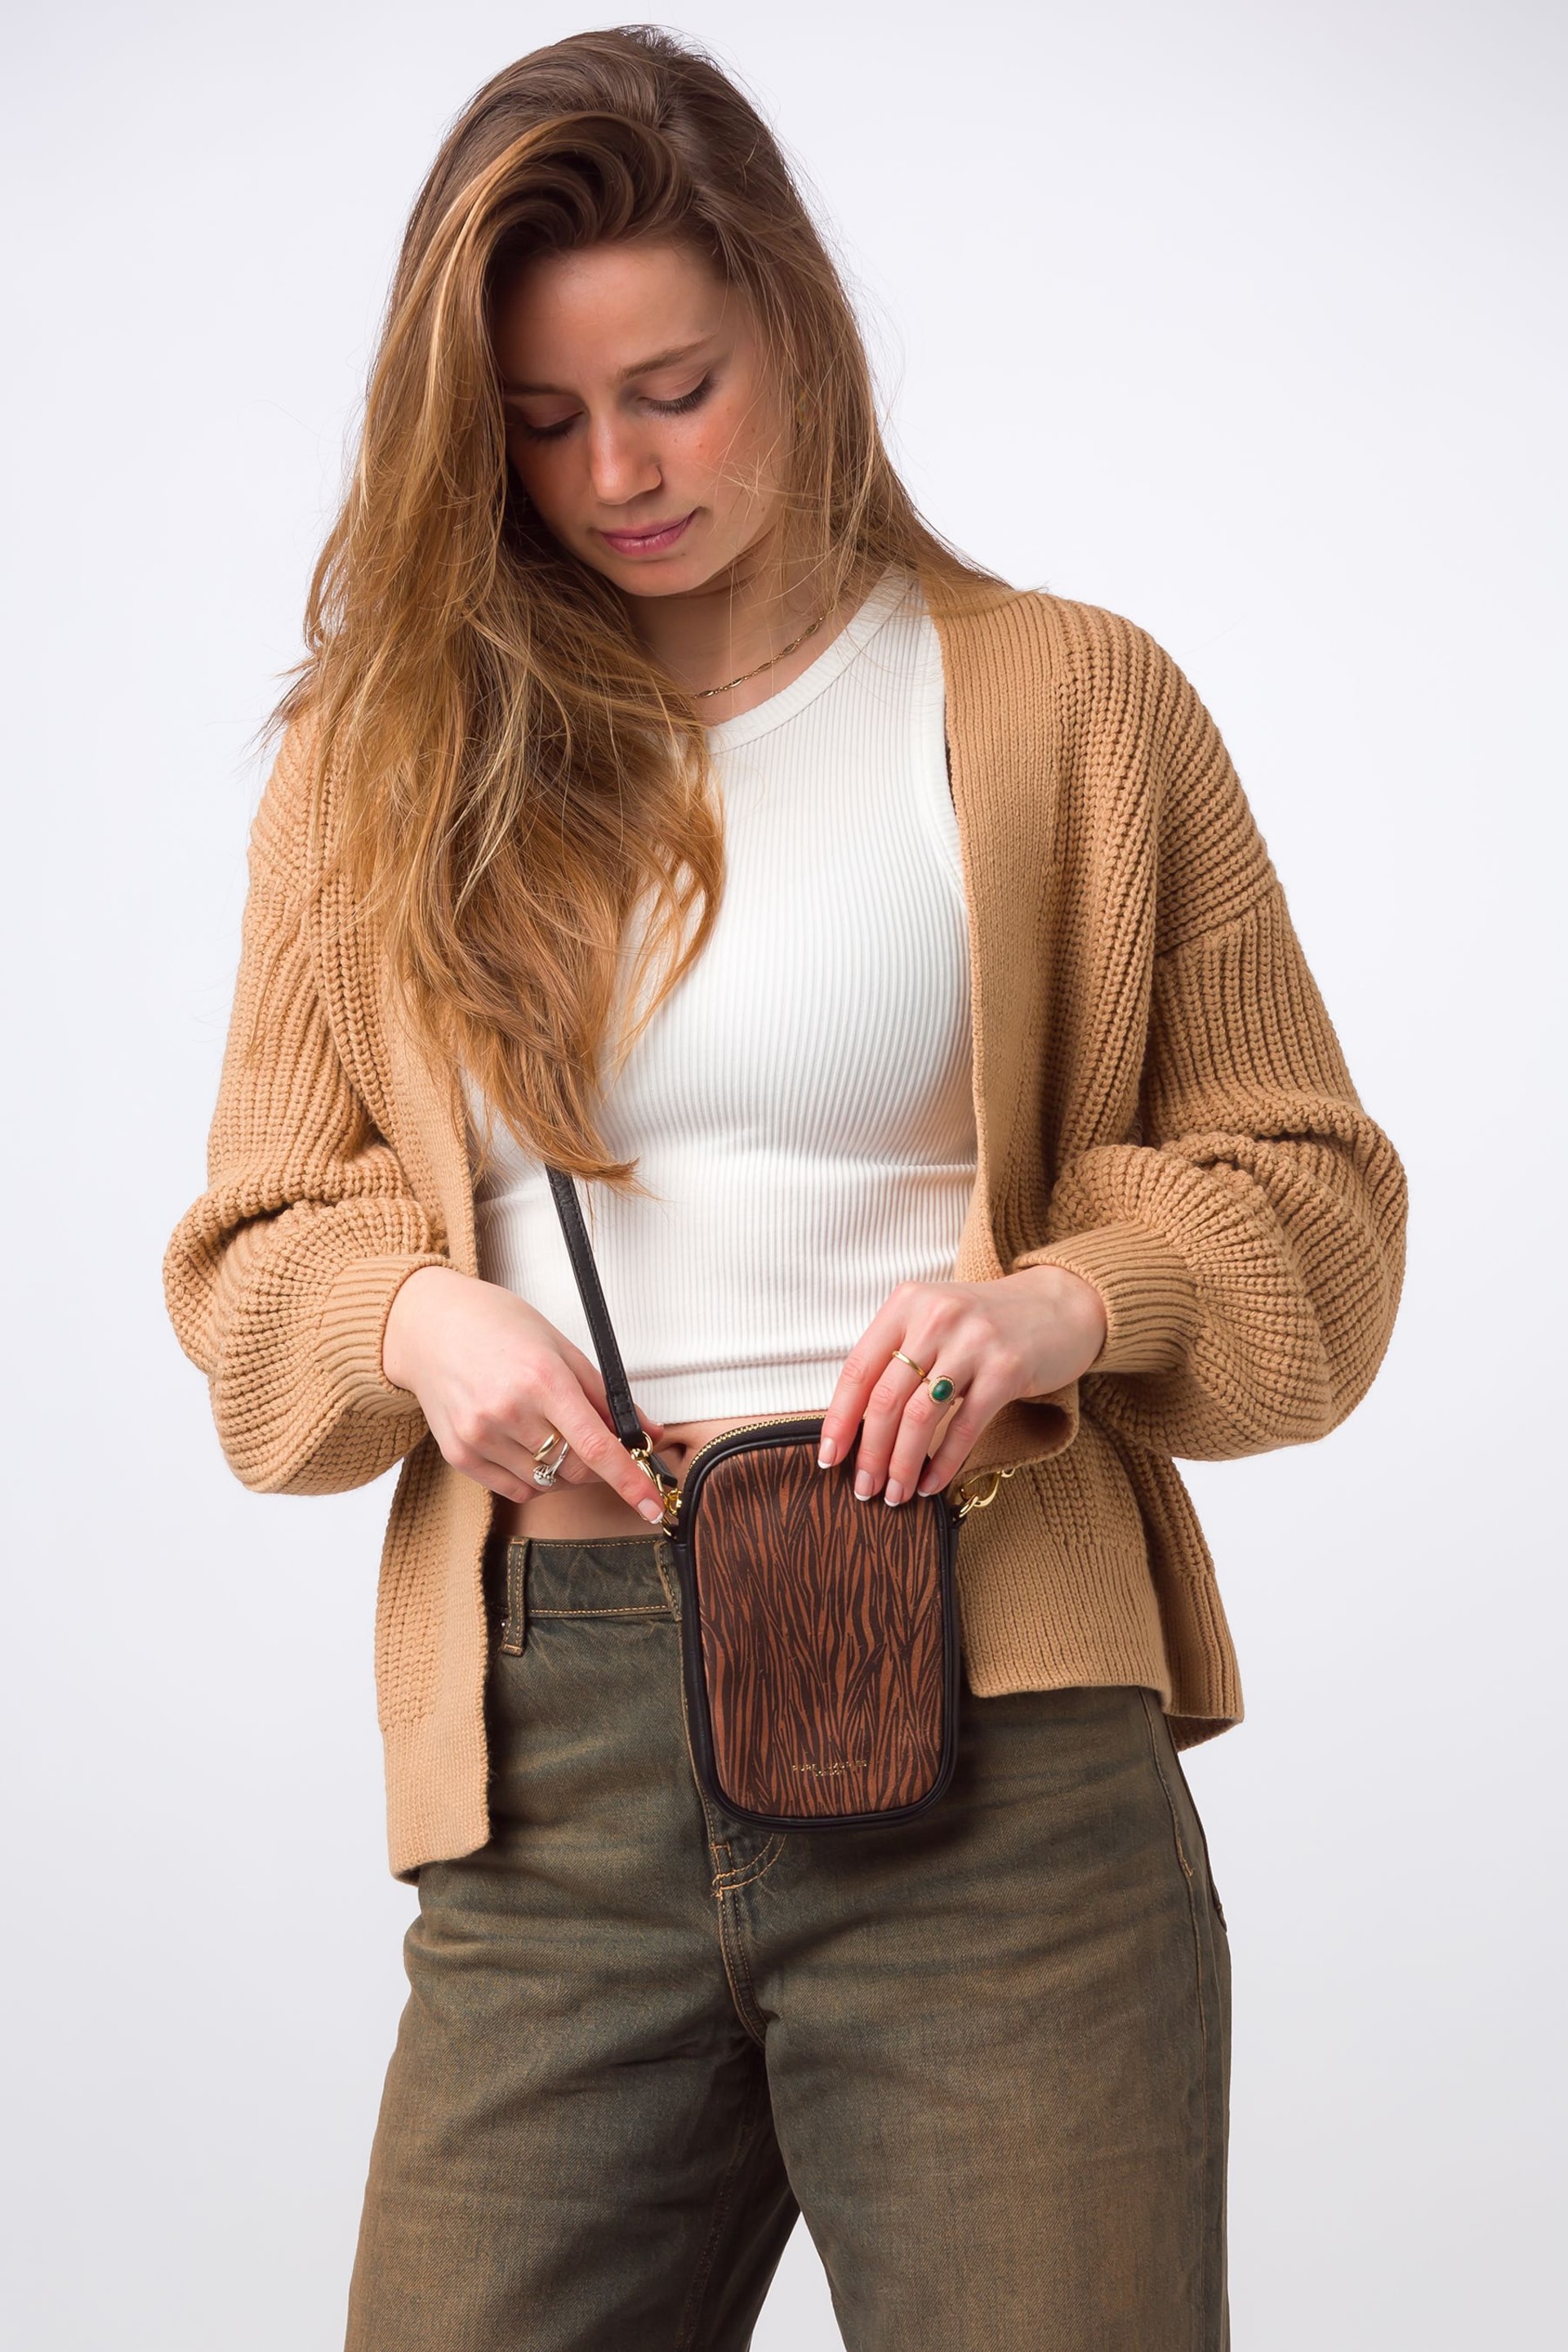 Pure Luxuries London Alaina Nappa Leather Cross-Body Phone Bag - Image 2 of 8